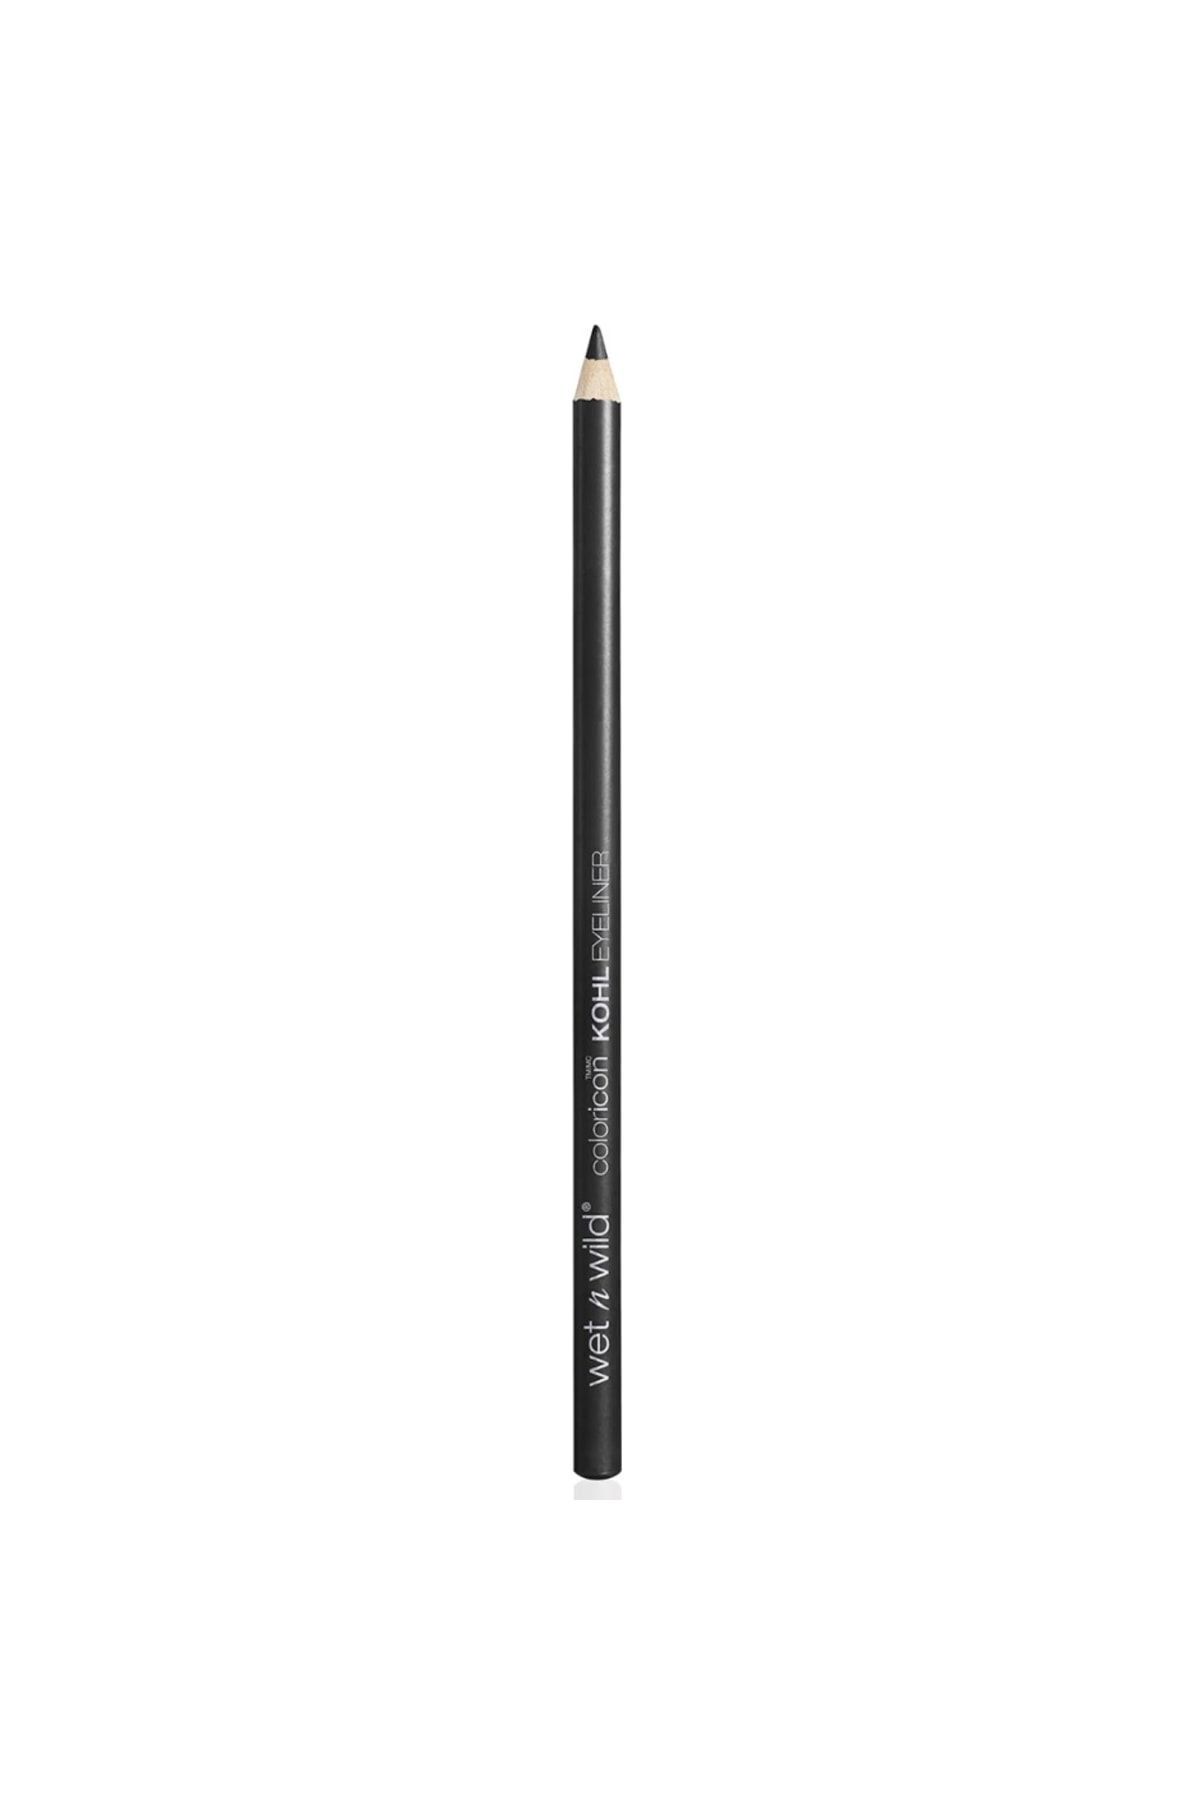 WET N WİLD Color Icon Kohl Eyeliner Pencil Göz Kalemi Baby's Got Black E601a